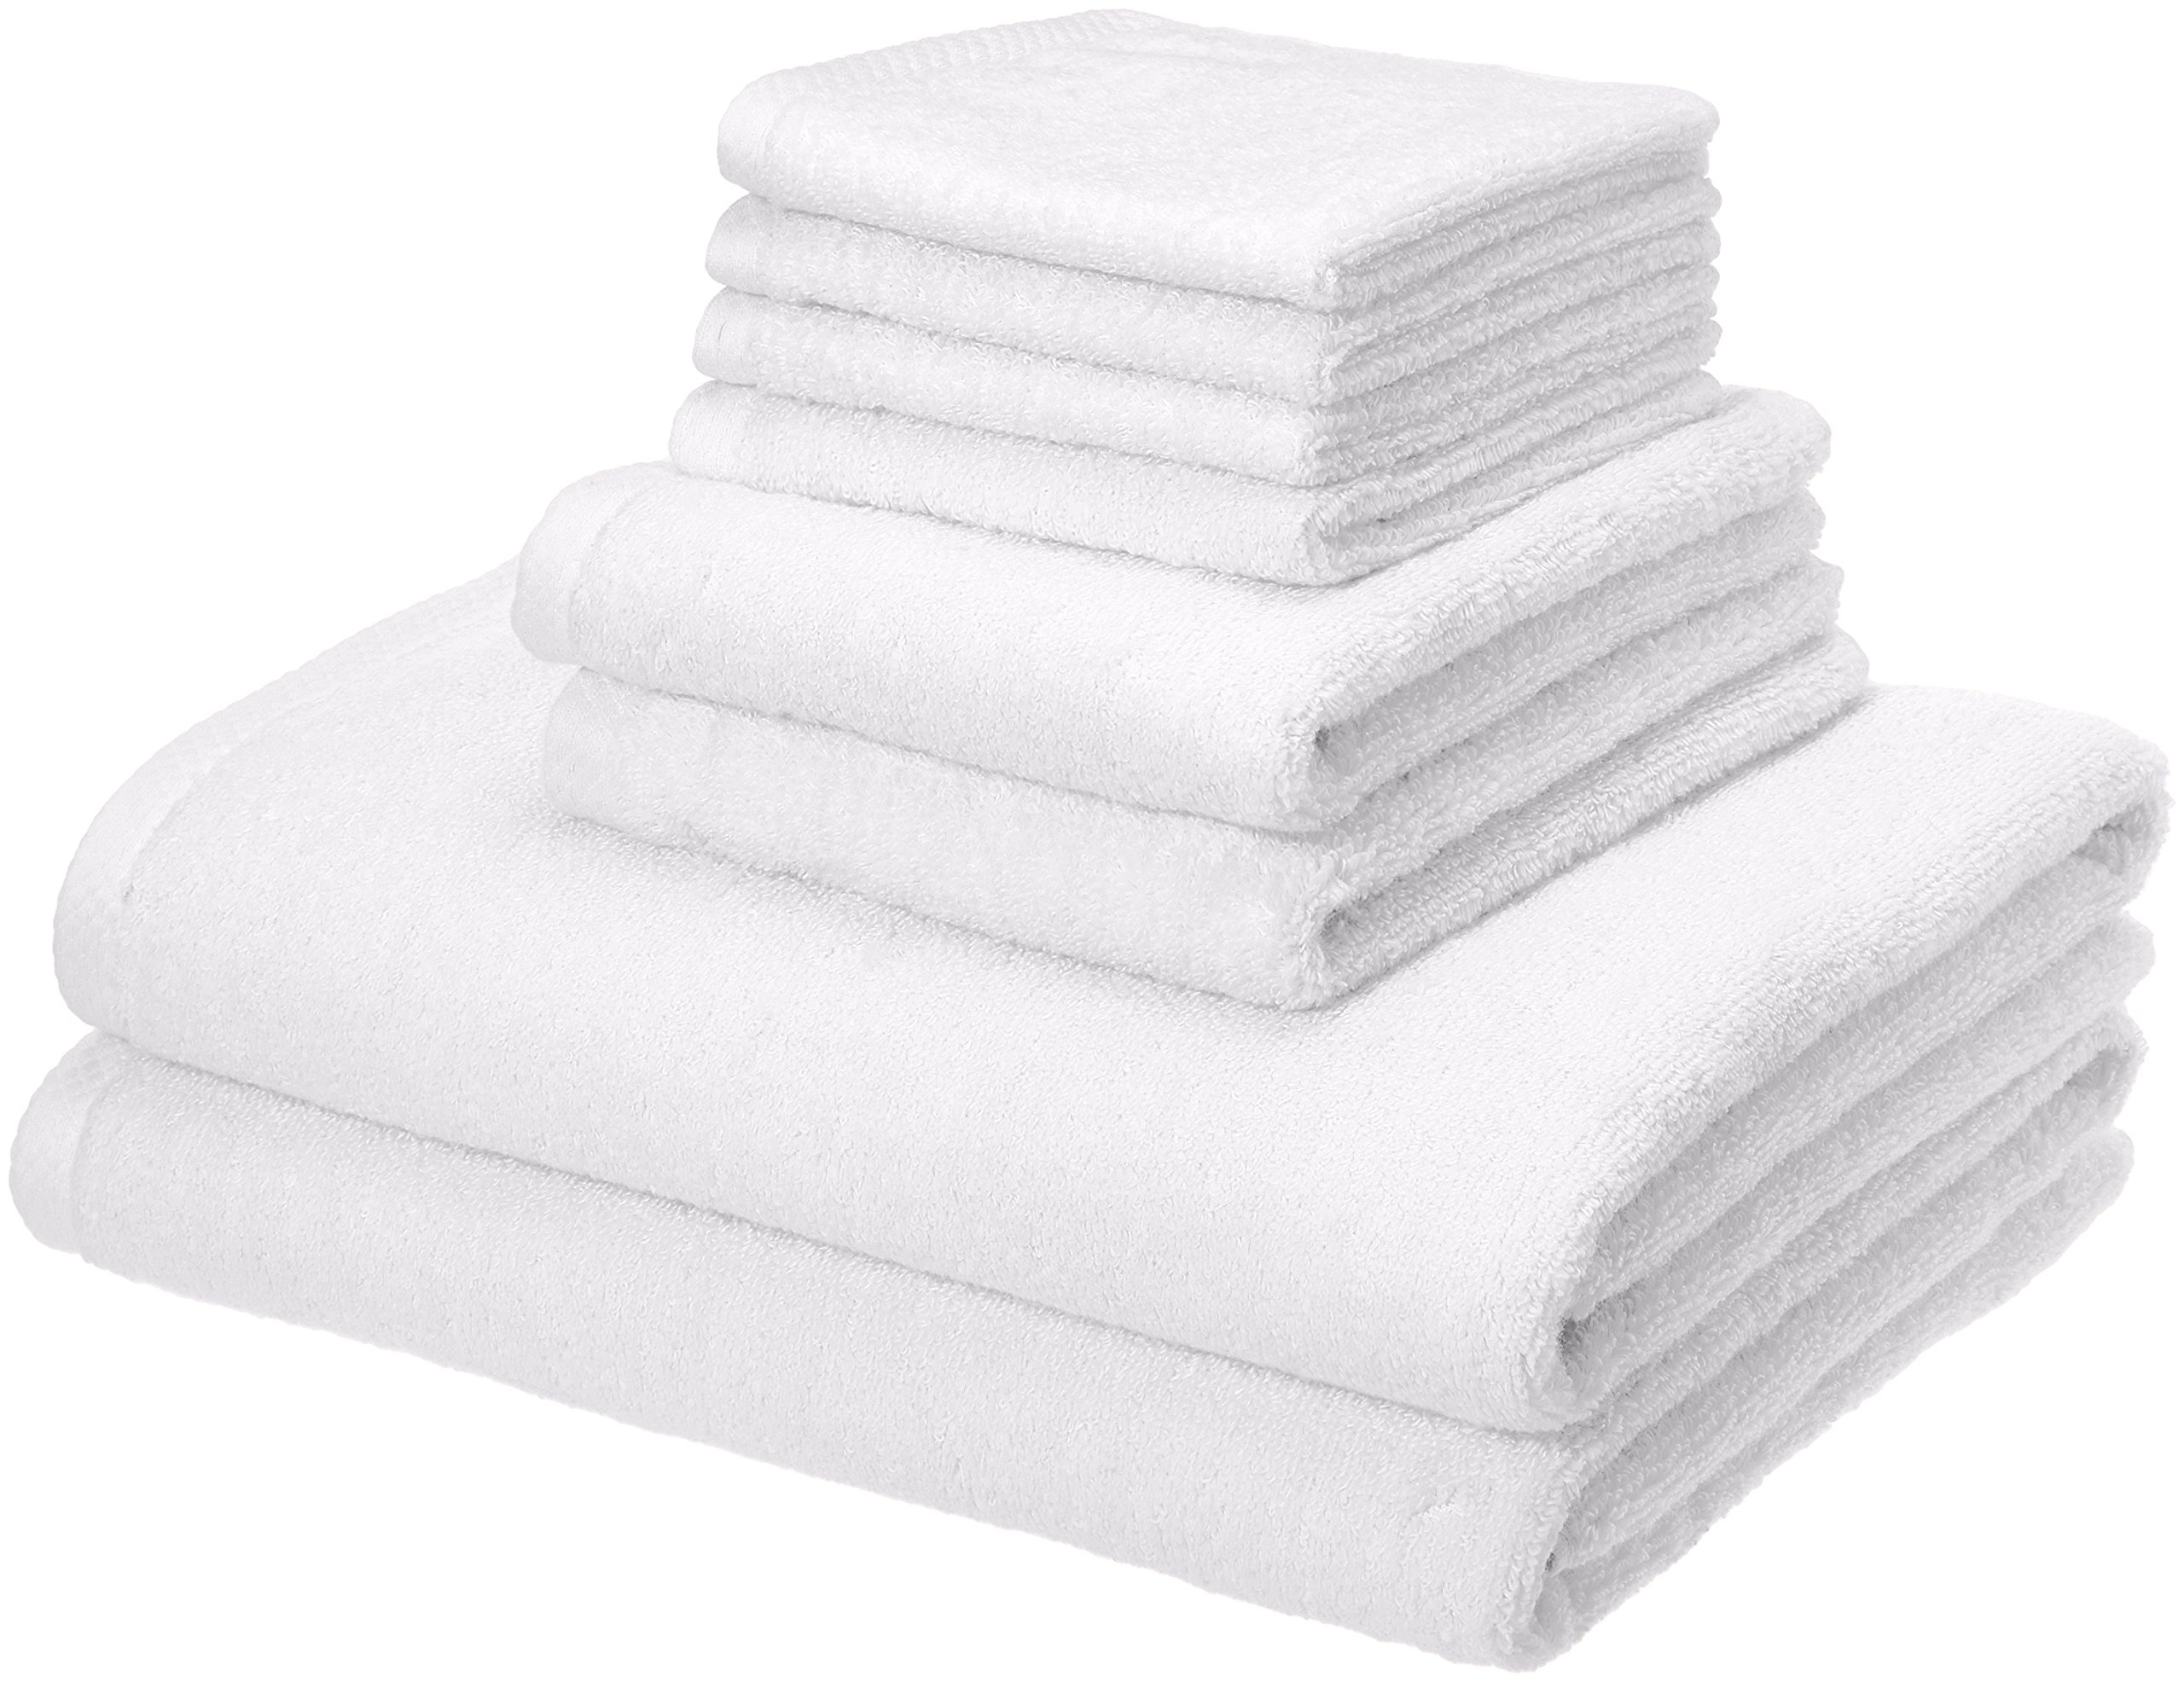 Book Cover Amazon Basics 100% Cotton Quick-Dry Bath Towel, 8-Piece Set, White, 10